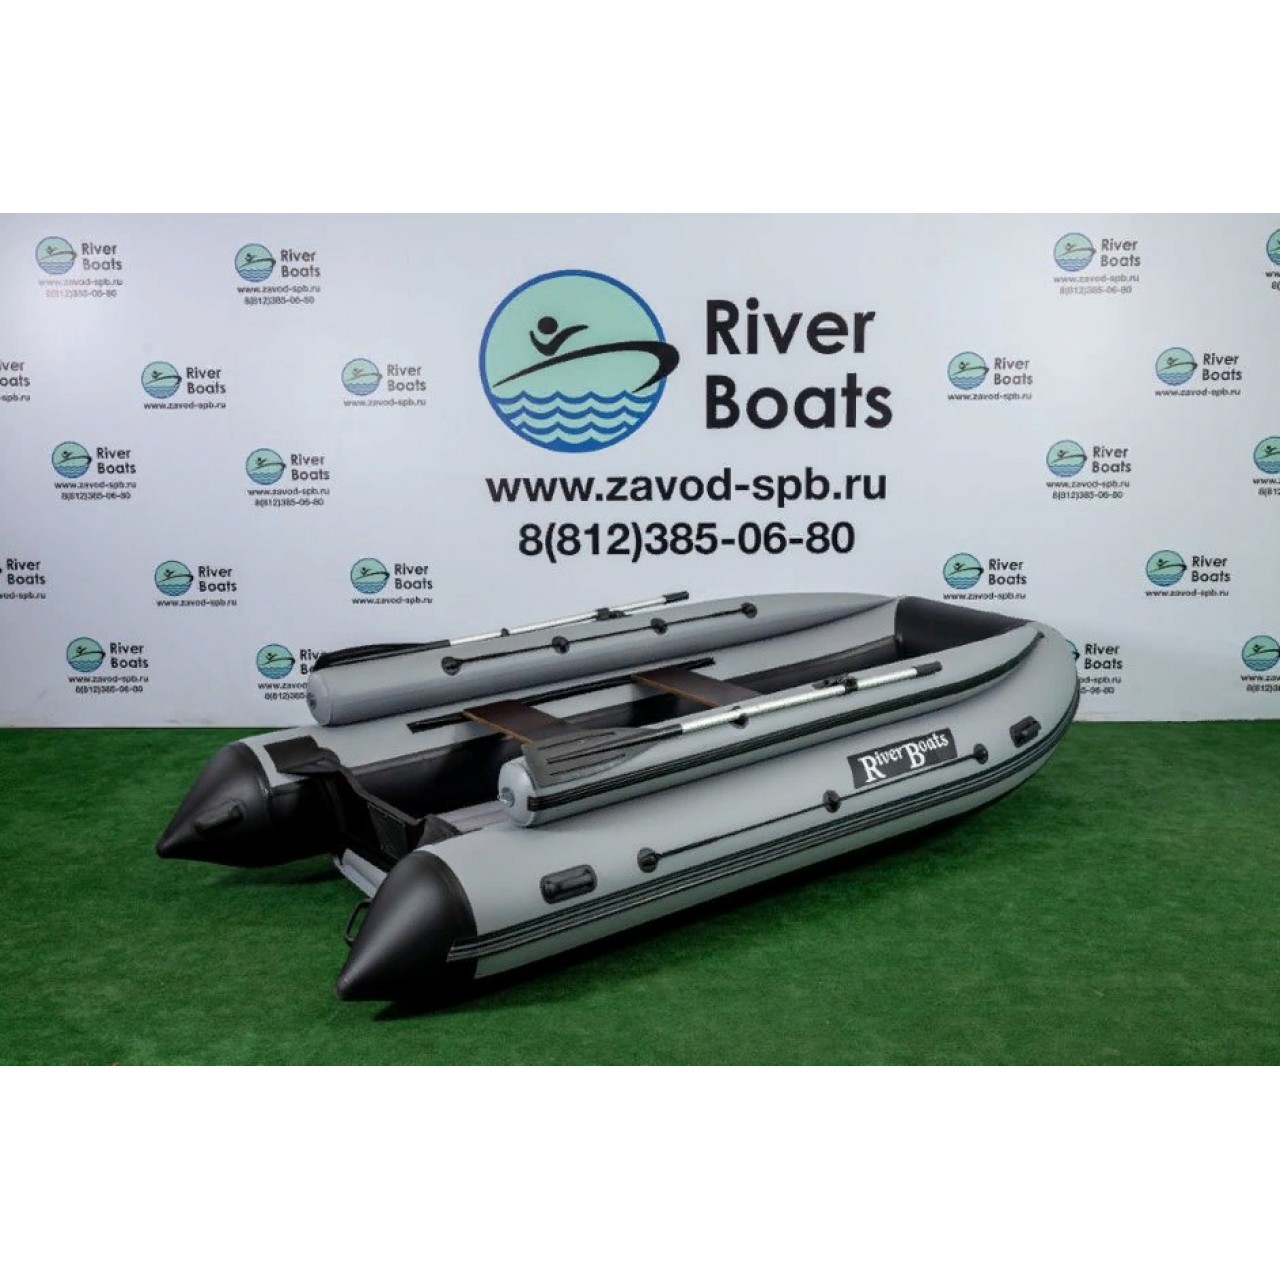 River Boats RB 370 (НДНД) + Фальшборт